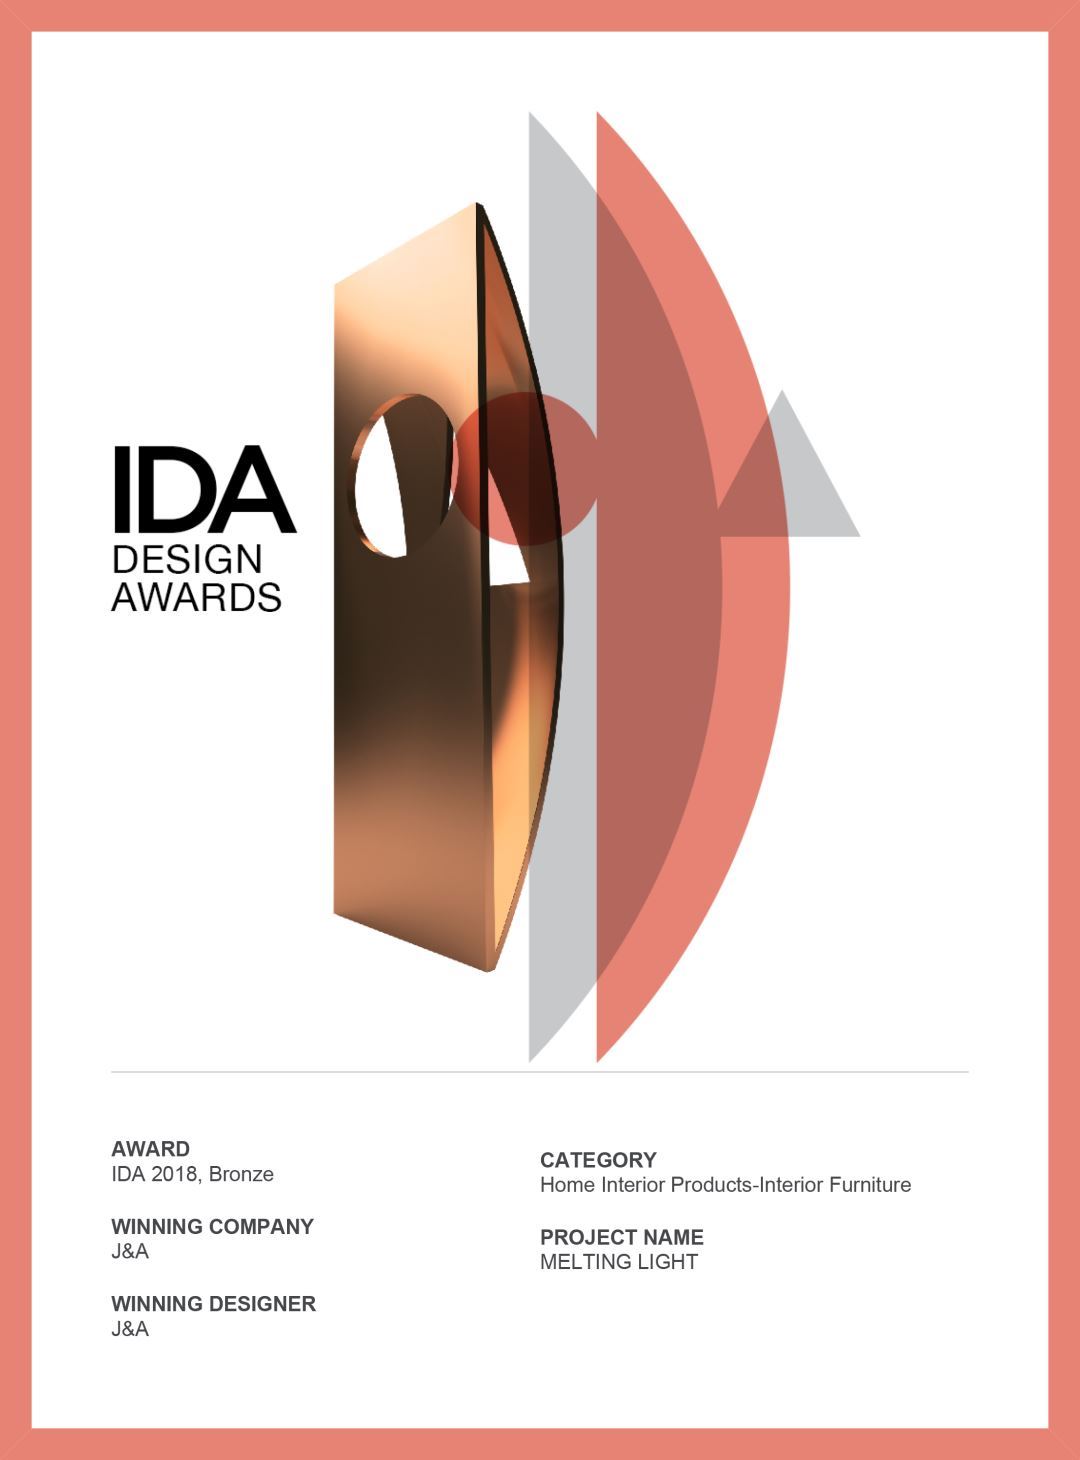 J&A杰恩设计Melting Light “铄”系列家具荣获2018年度“美国IDA国际设计大奖”